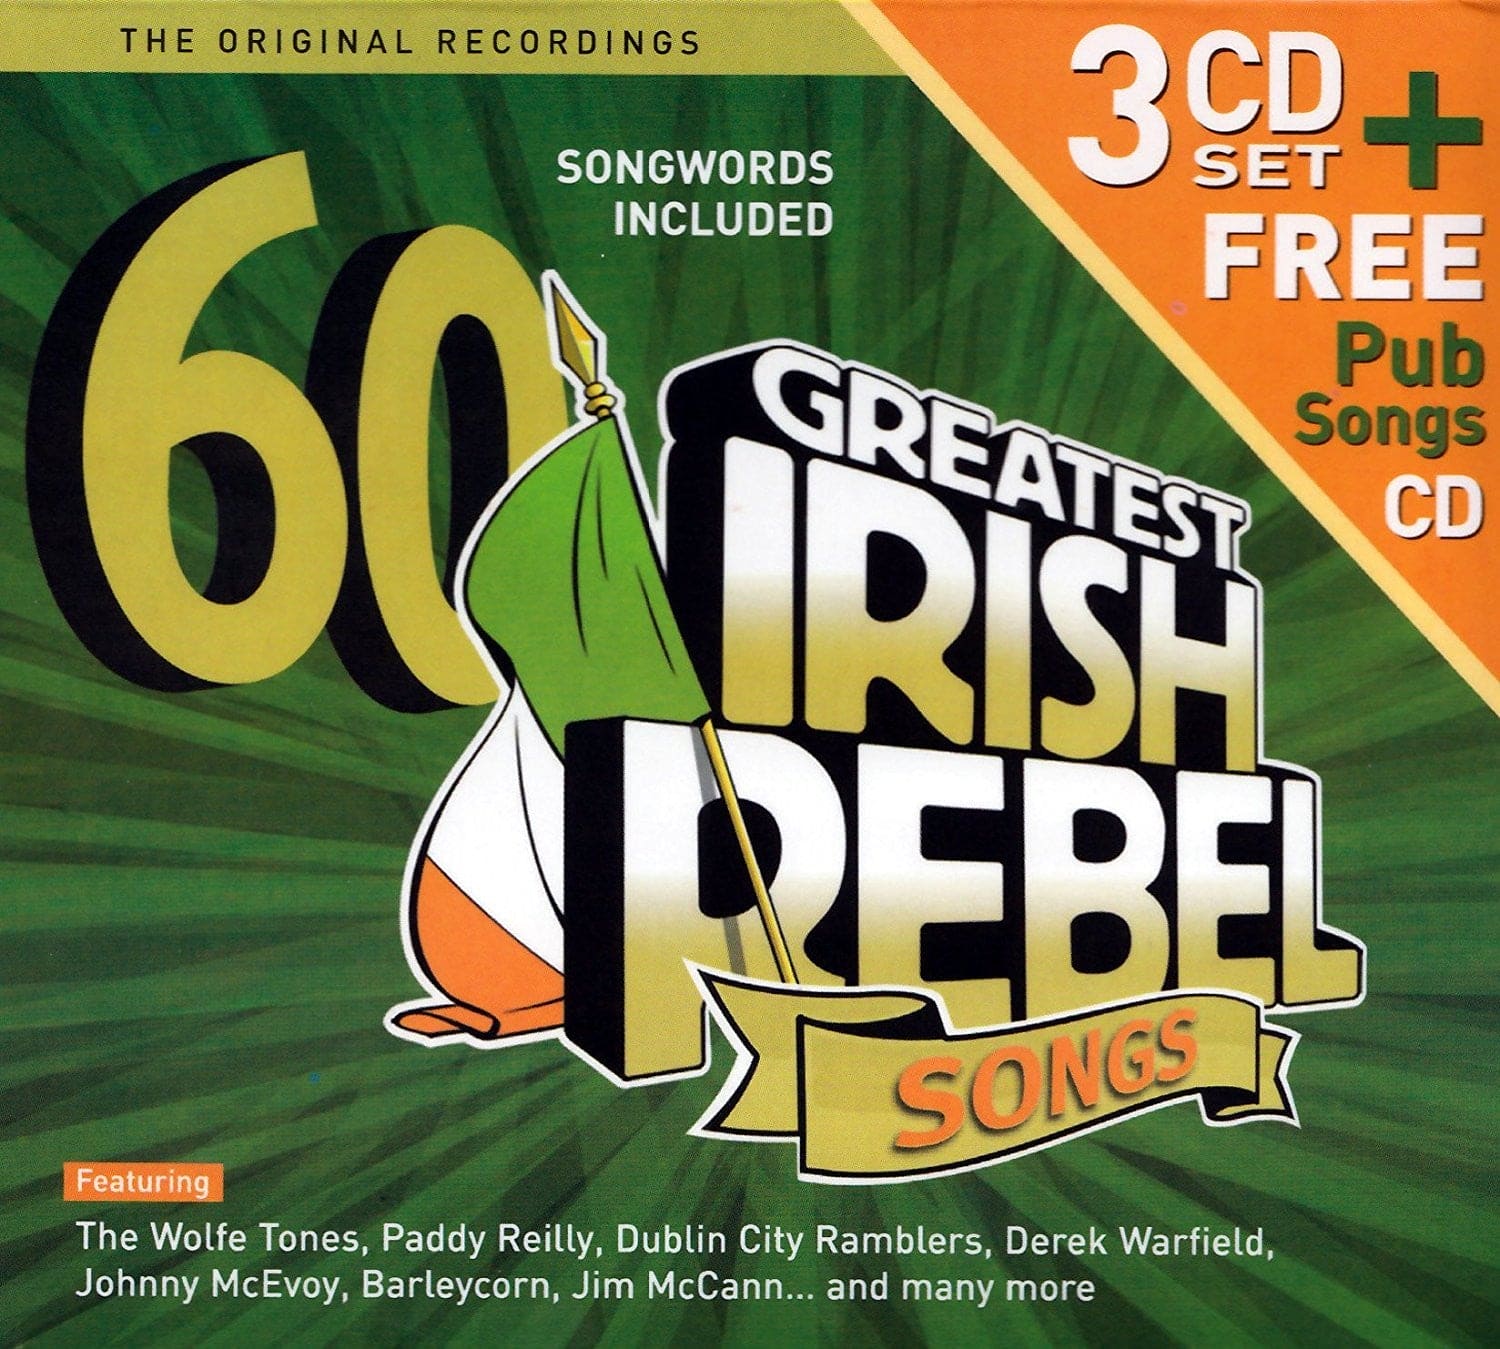 60 Greatest Irish Rebel Songs - Various Artists [3CD + Free CD]